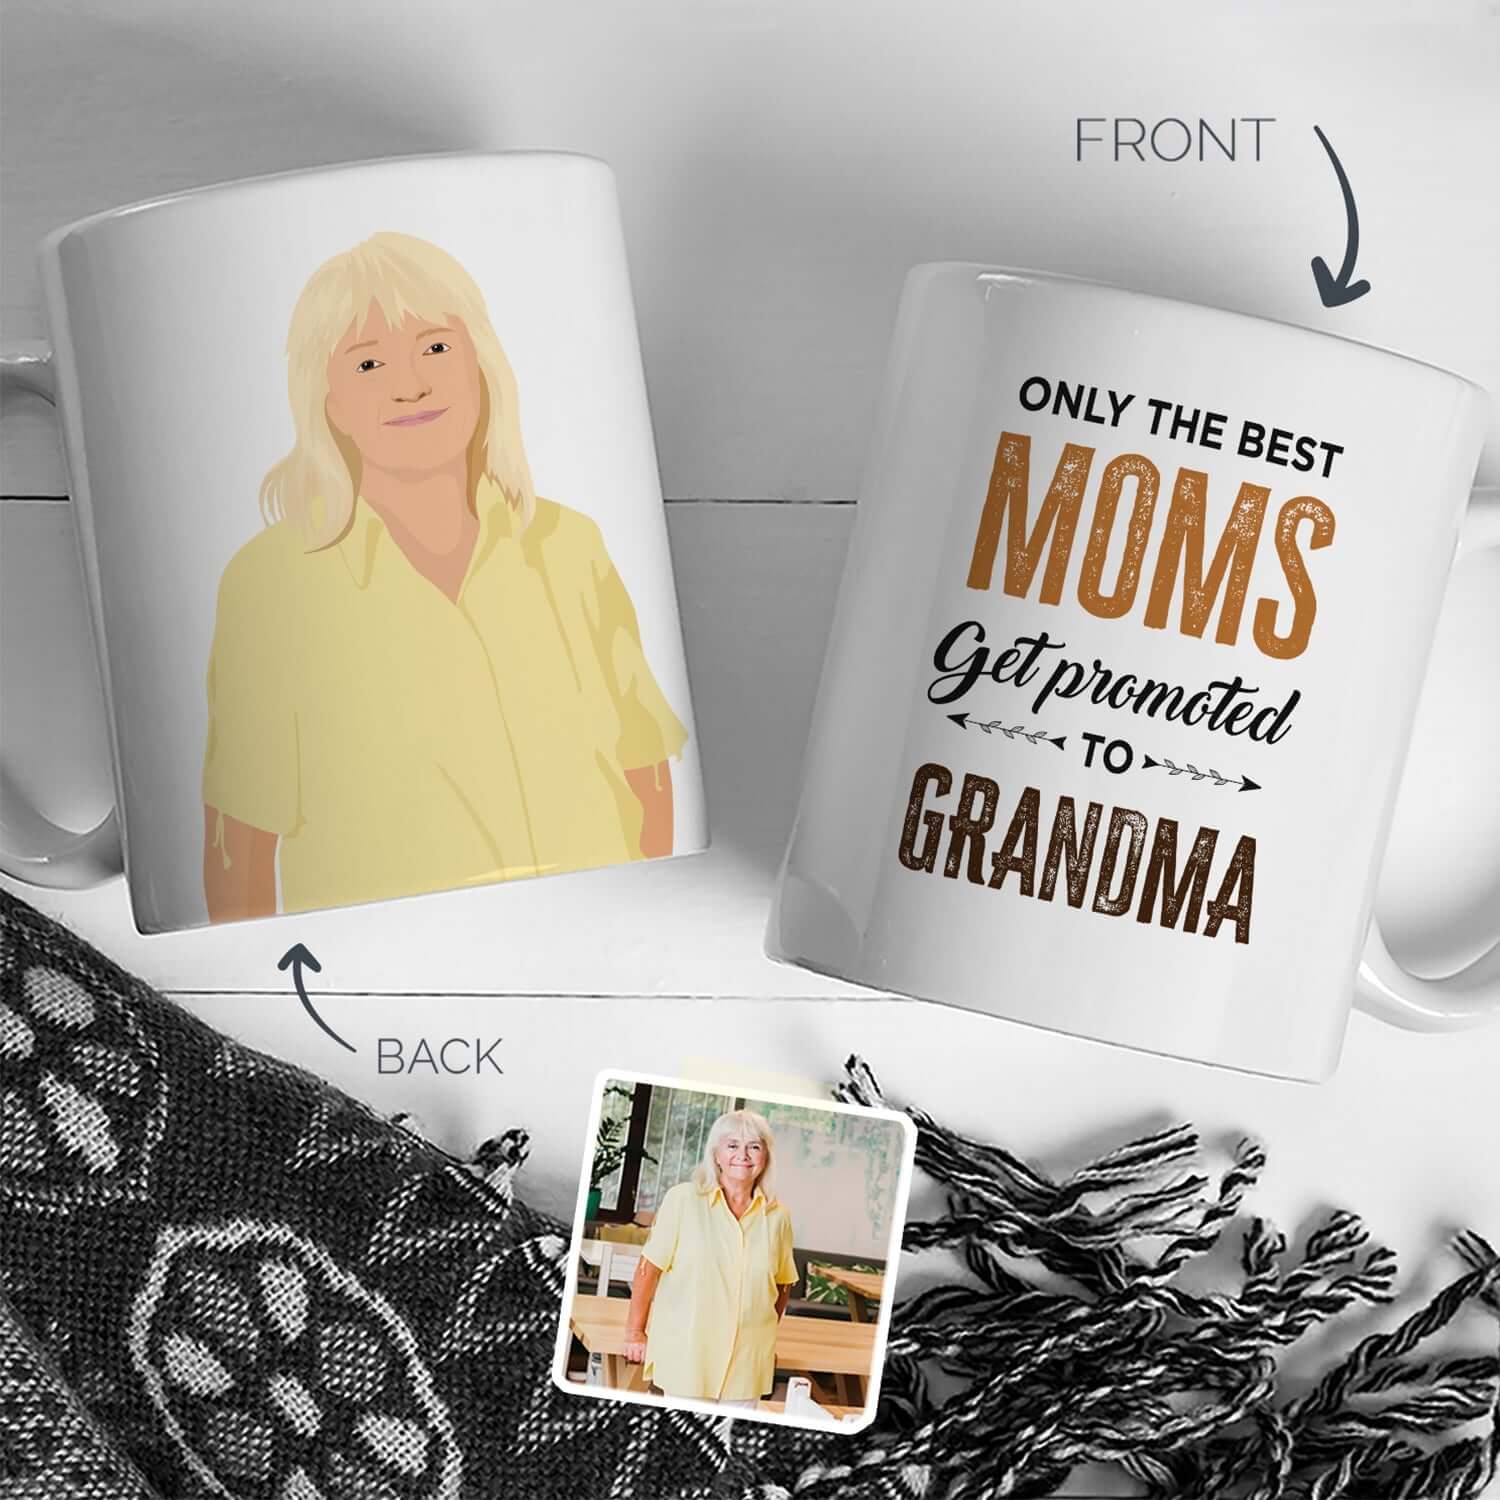 Custom Personalized Grandma Mug from Photo